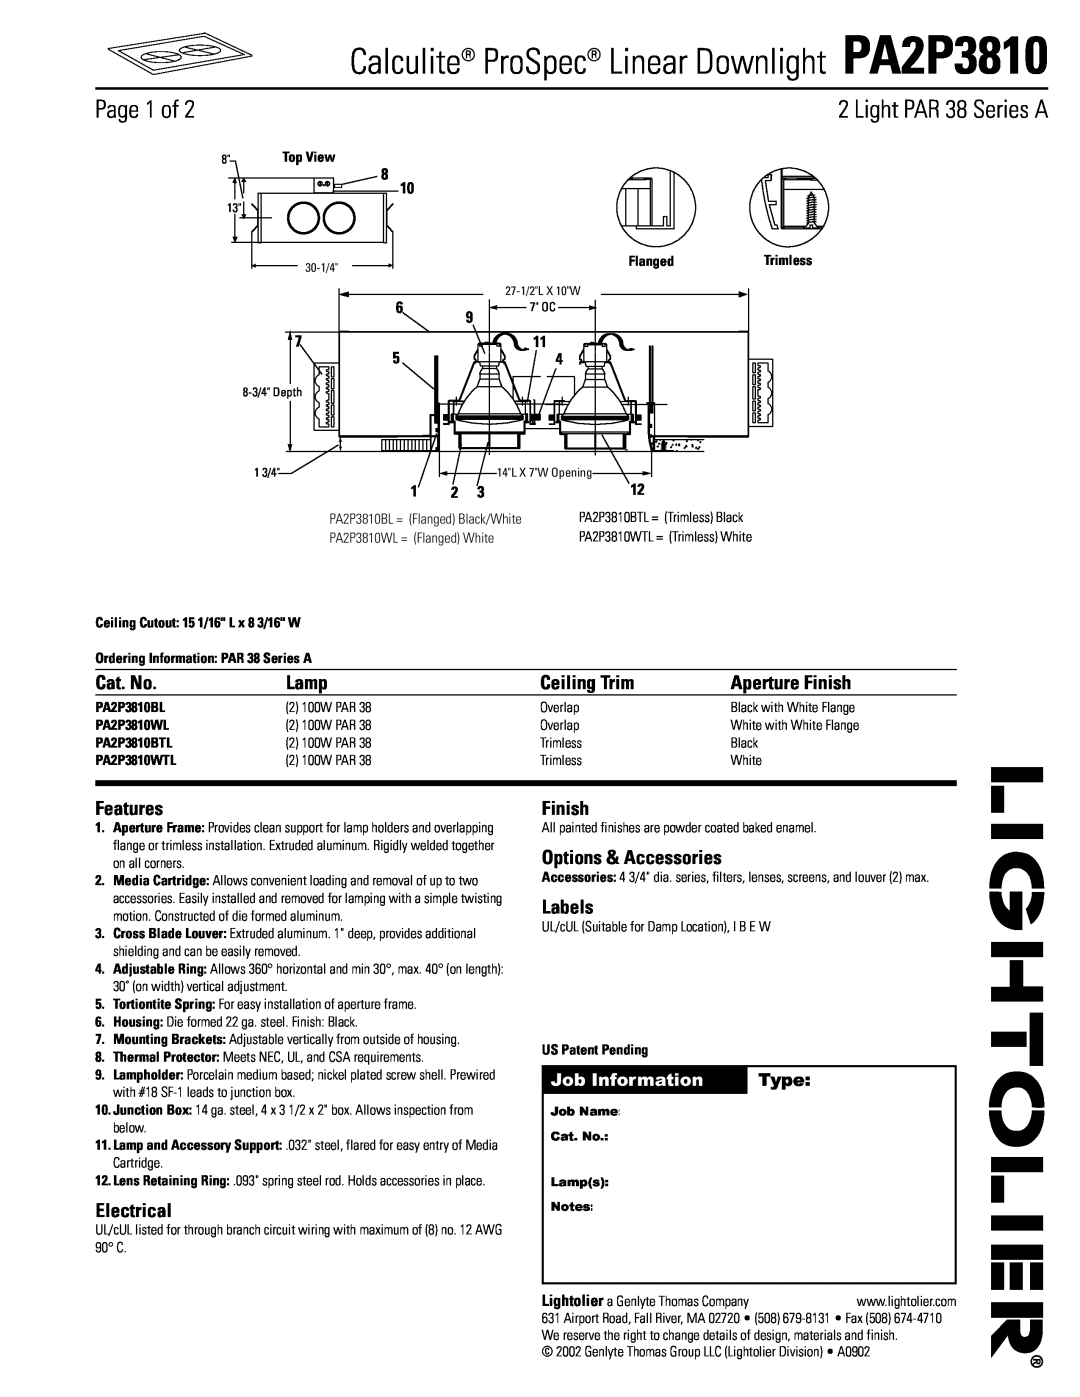 Lightolier manual Calculite ProSpec Linear Downlight PA2P3810, Page 1 of, Light PAR 38 Series A, Cat. No, Lamp, Finish 